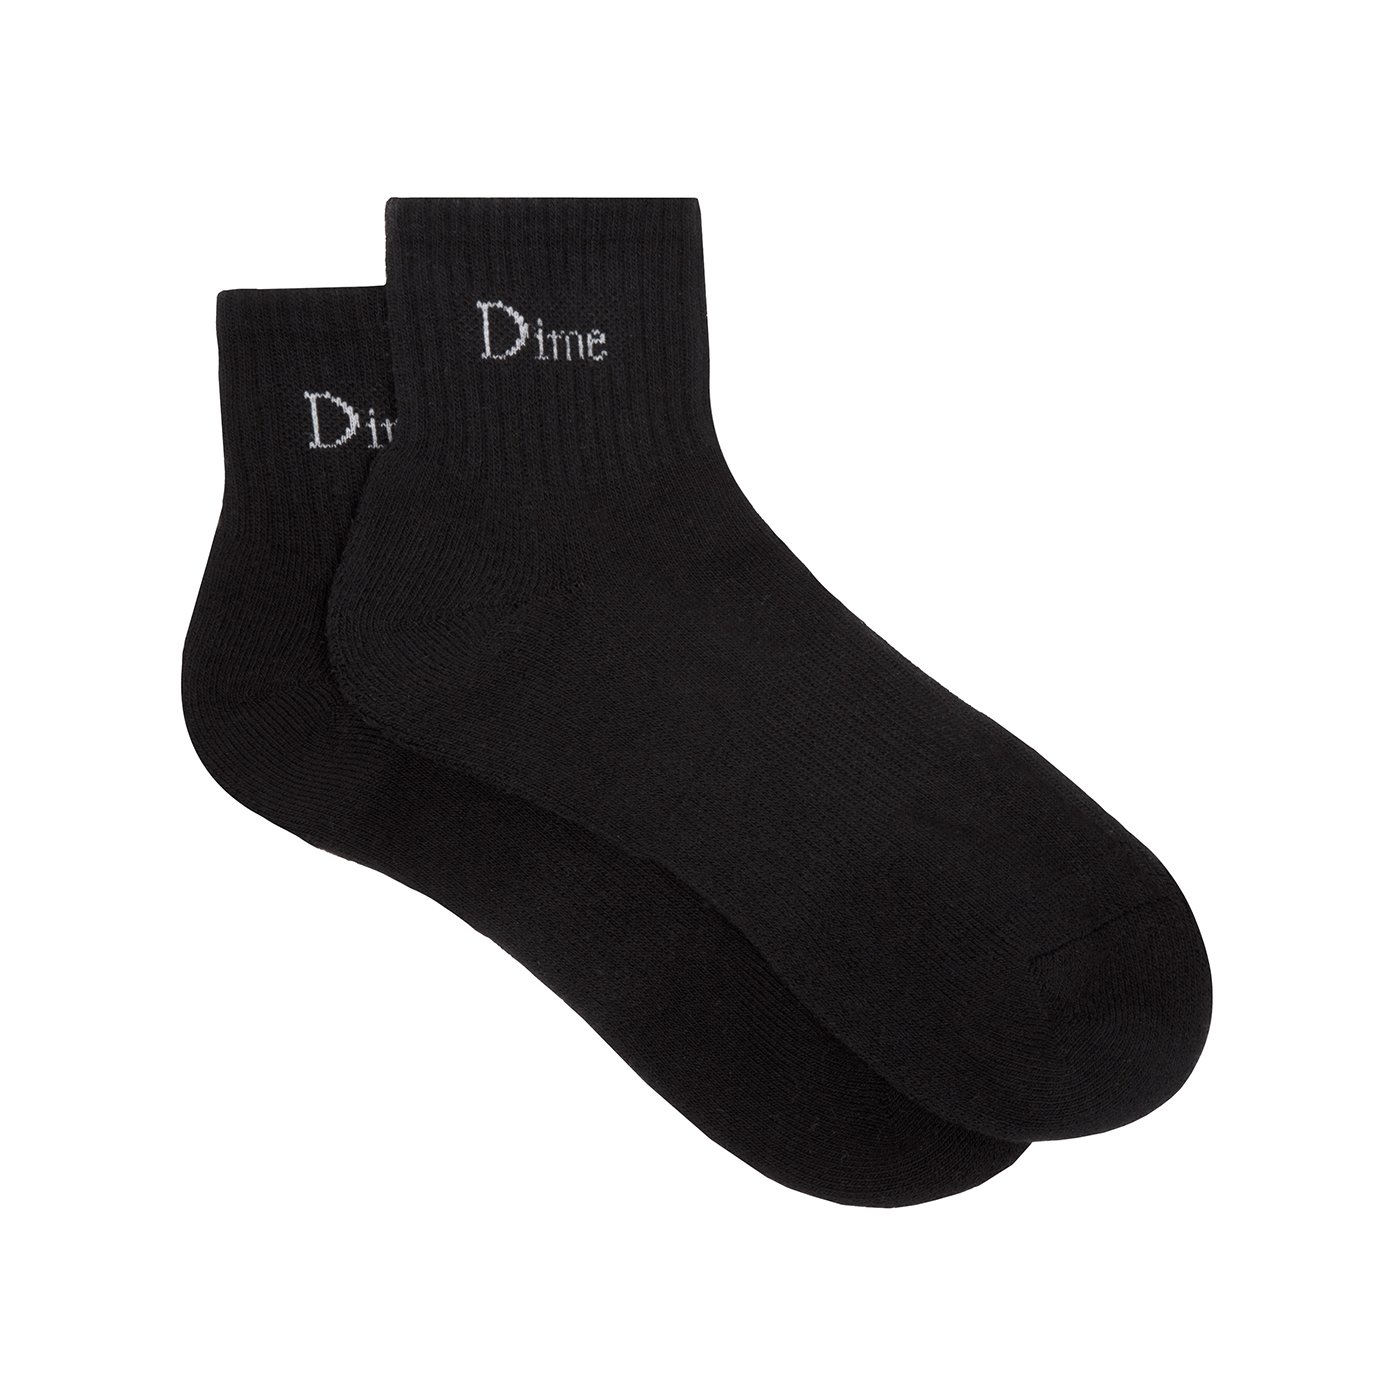 dime socks montreal skate brand